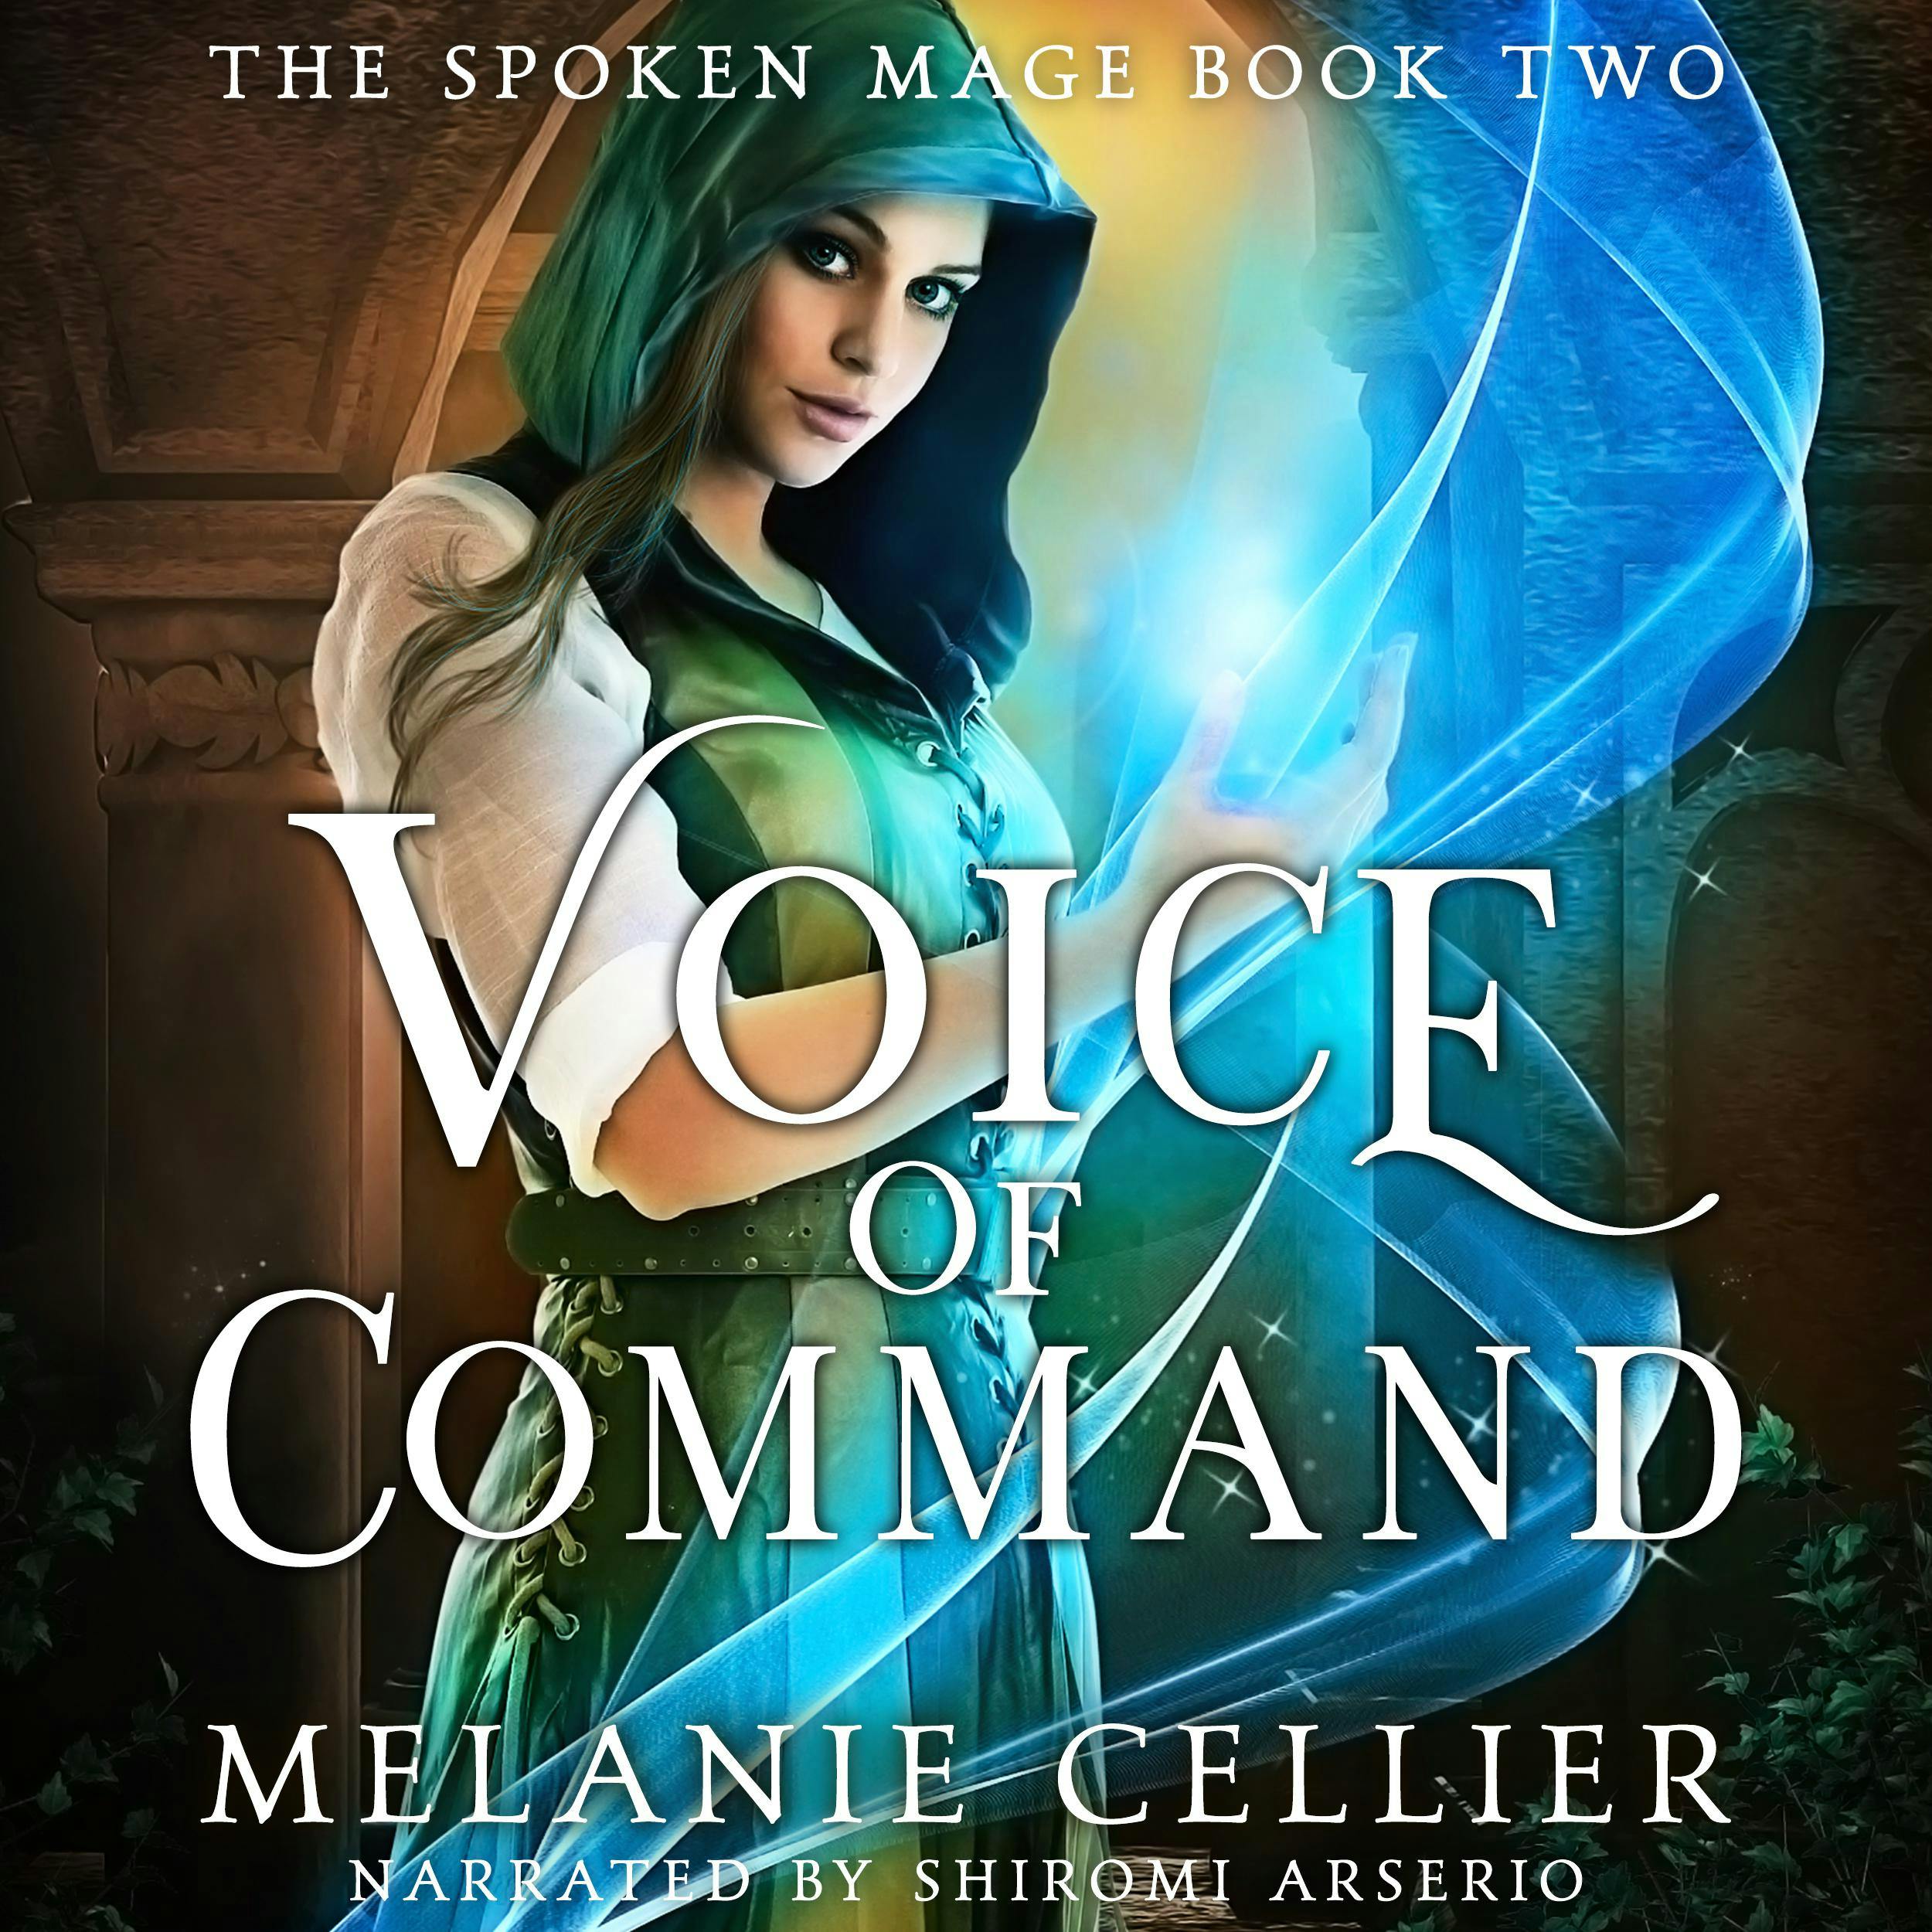 Voice of Command - Melanie Cellier